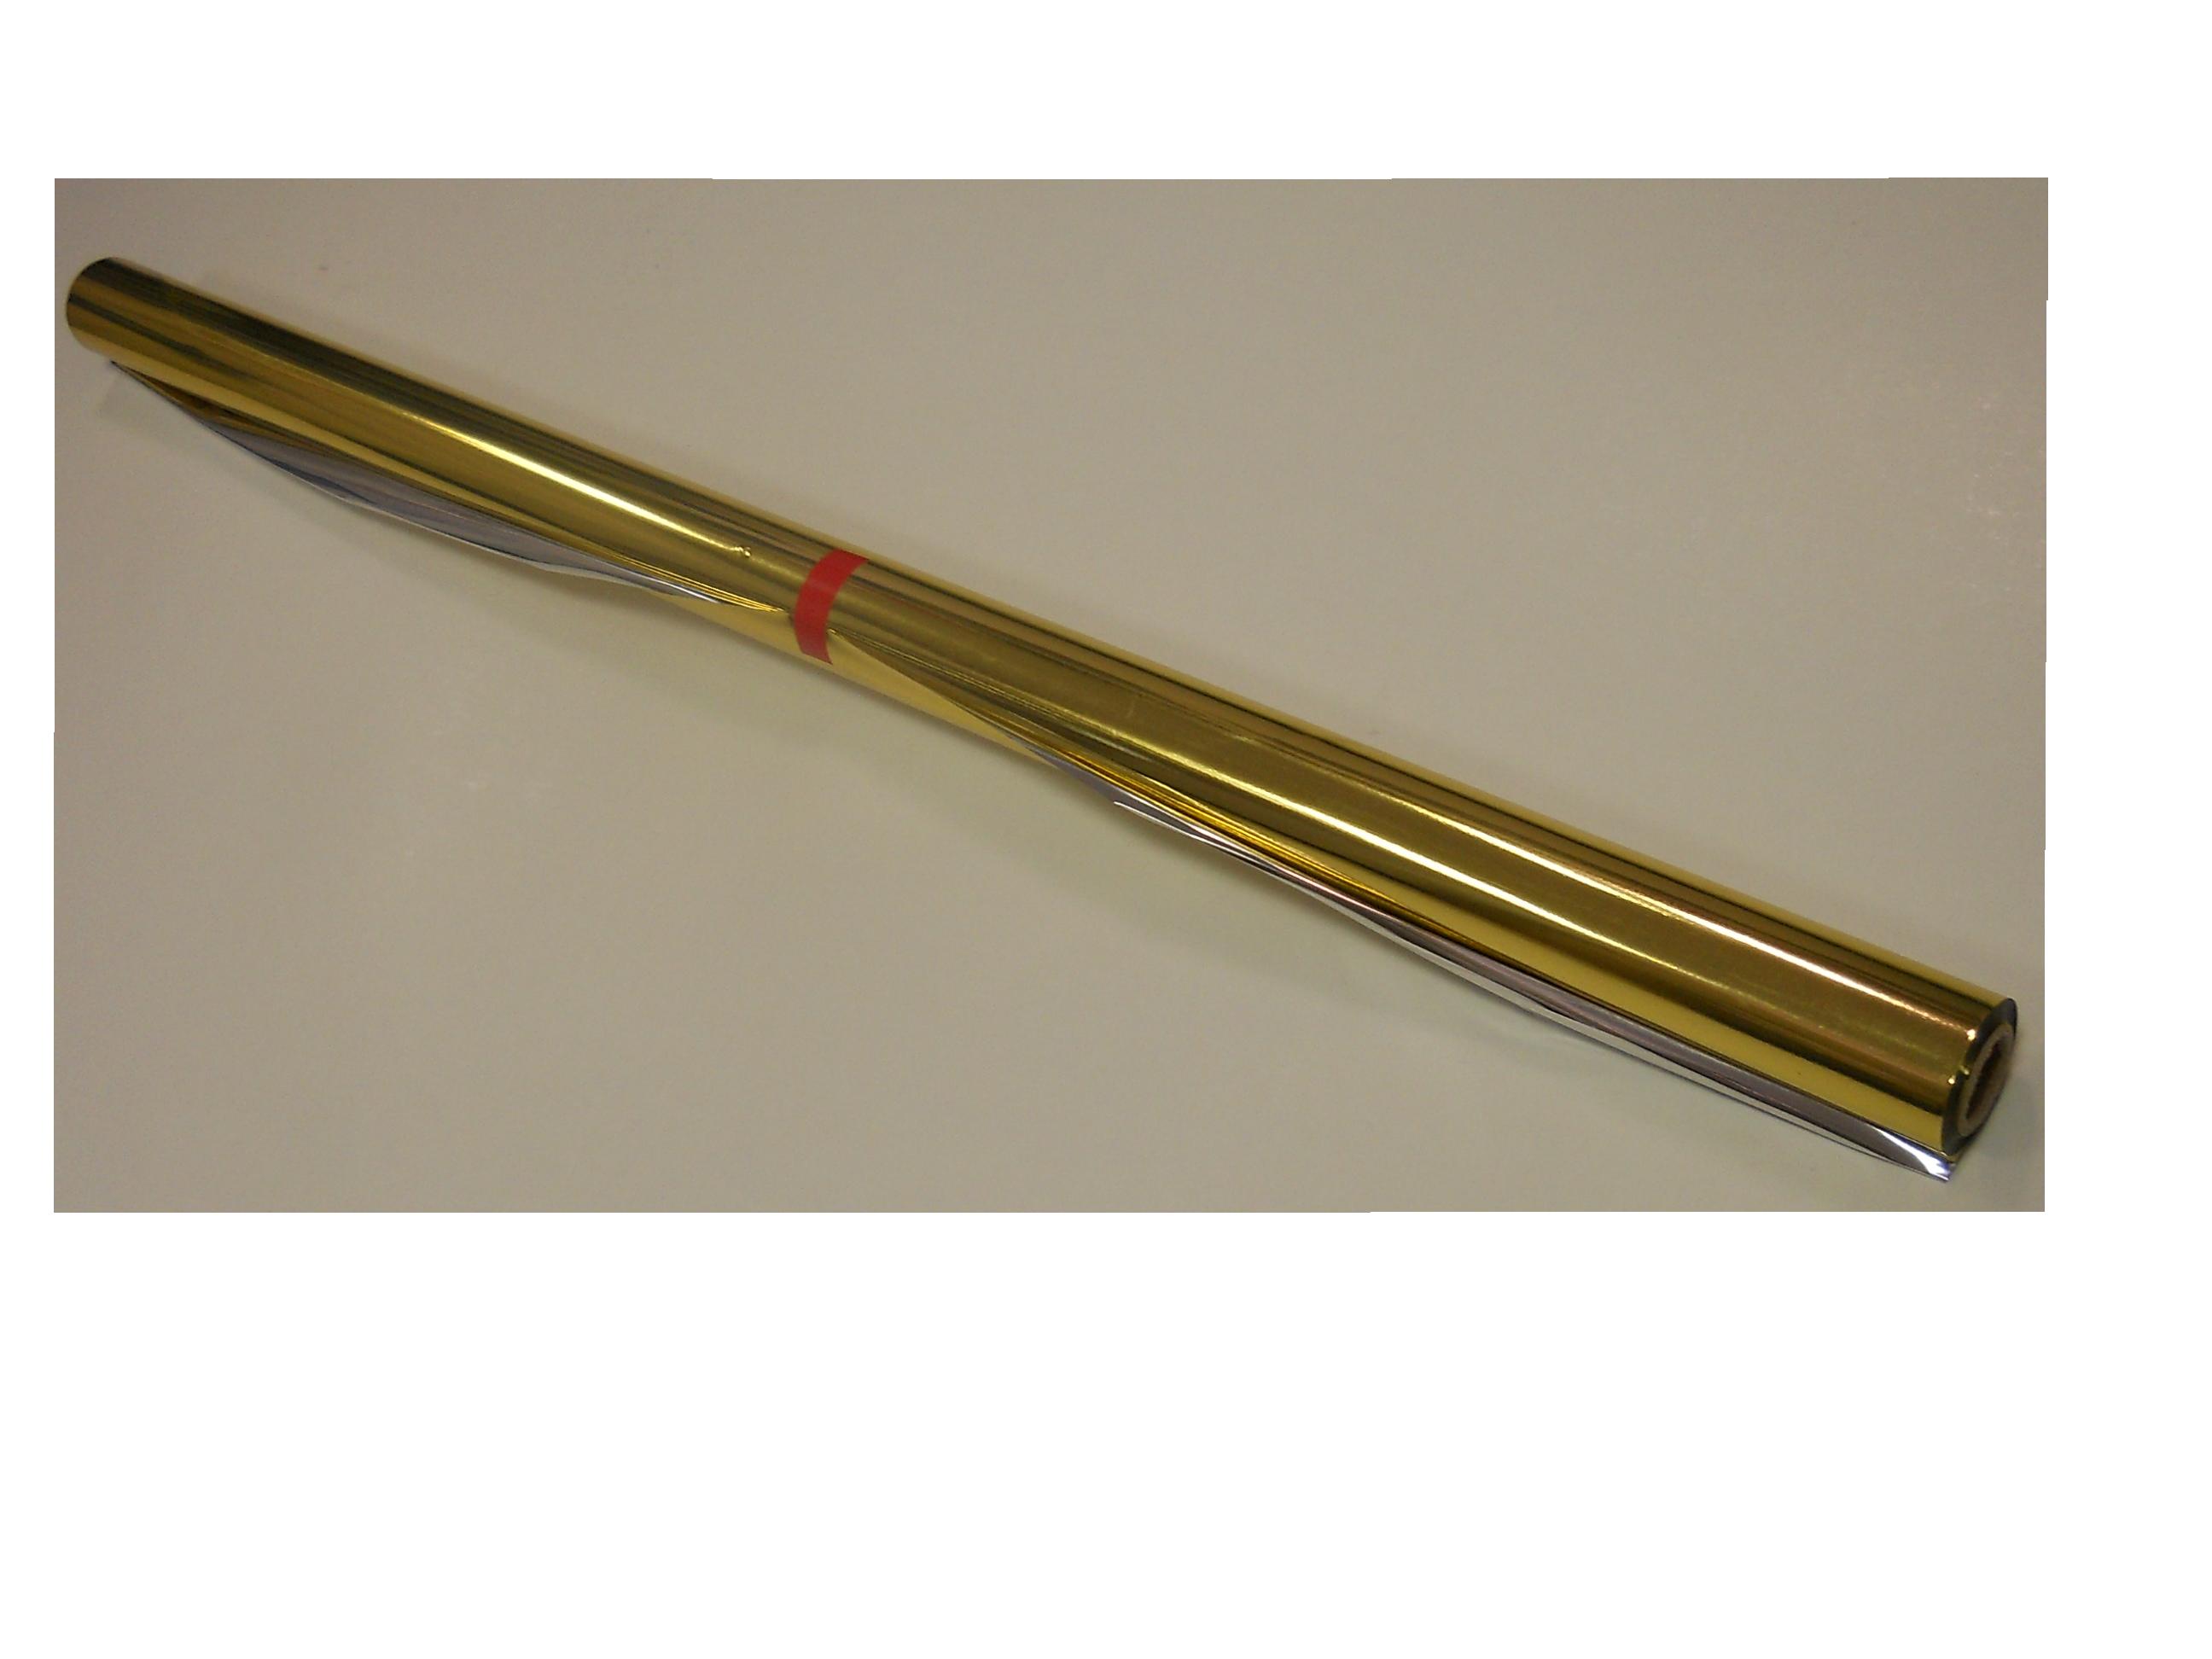 Baliaci metafán zlatý 1 rolka š 70 cm / dl.10 m  9,99 EUR s DPH rol.